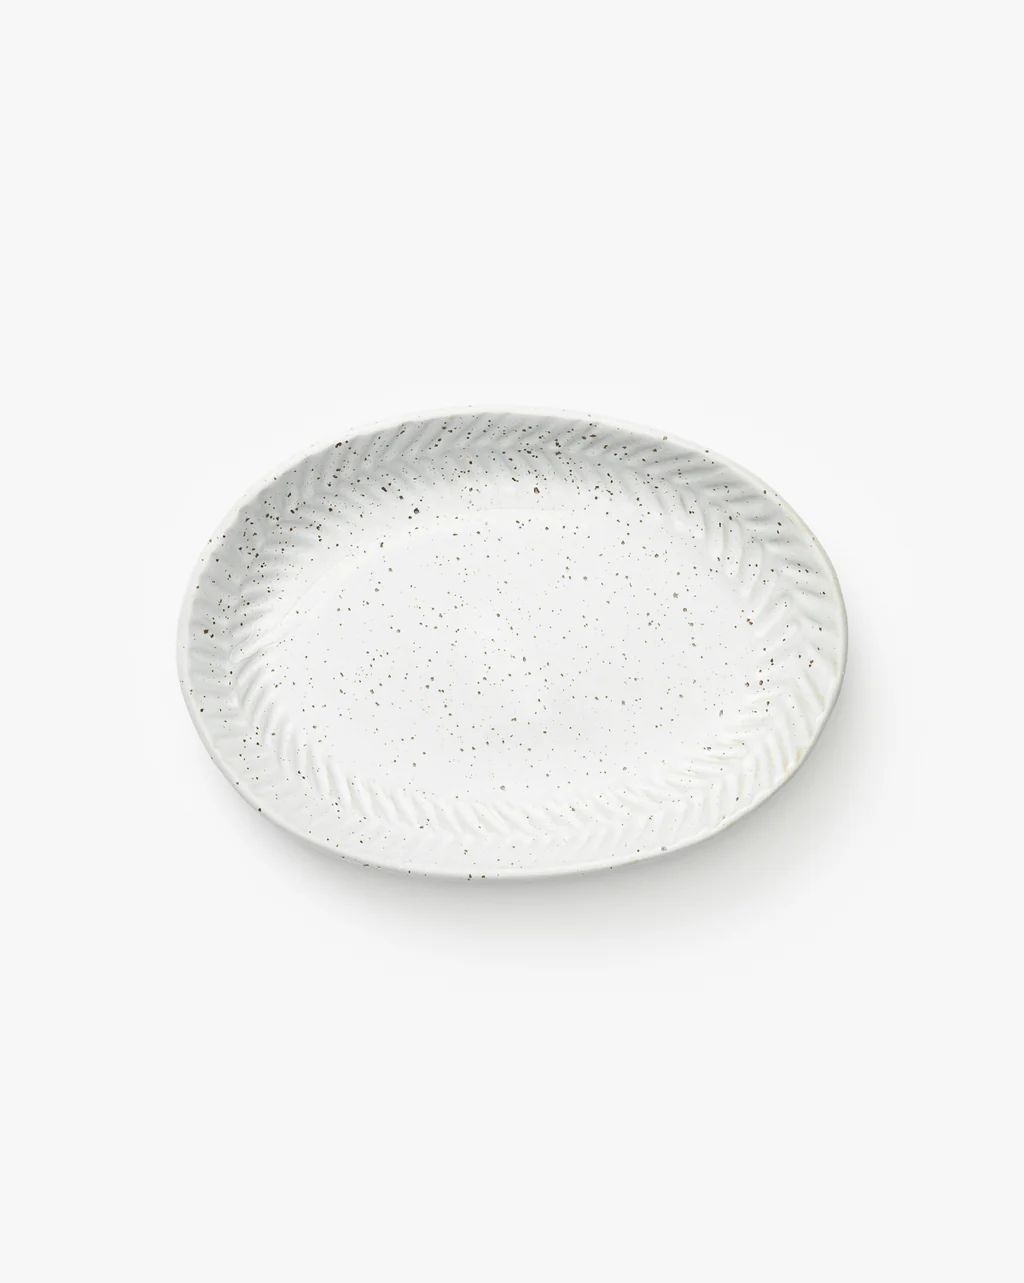 Cressida Stoneware Plate | McGee & Co.